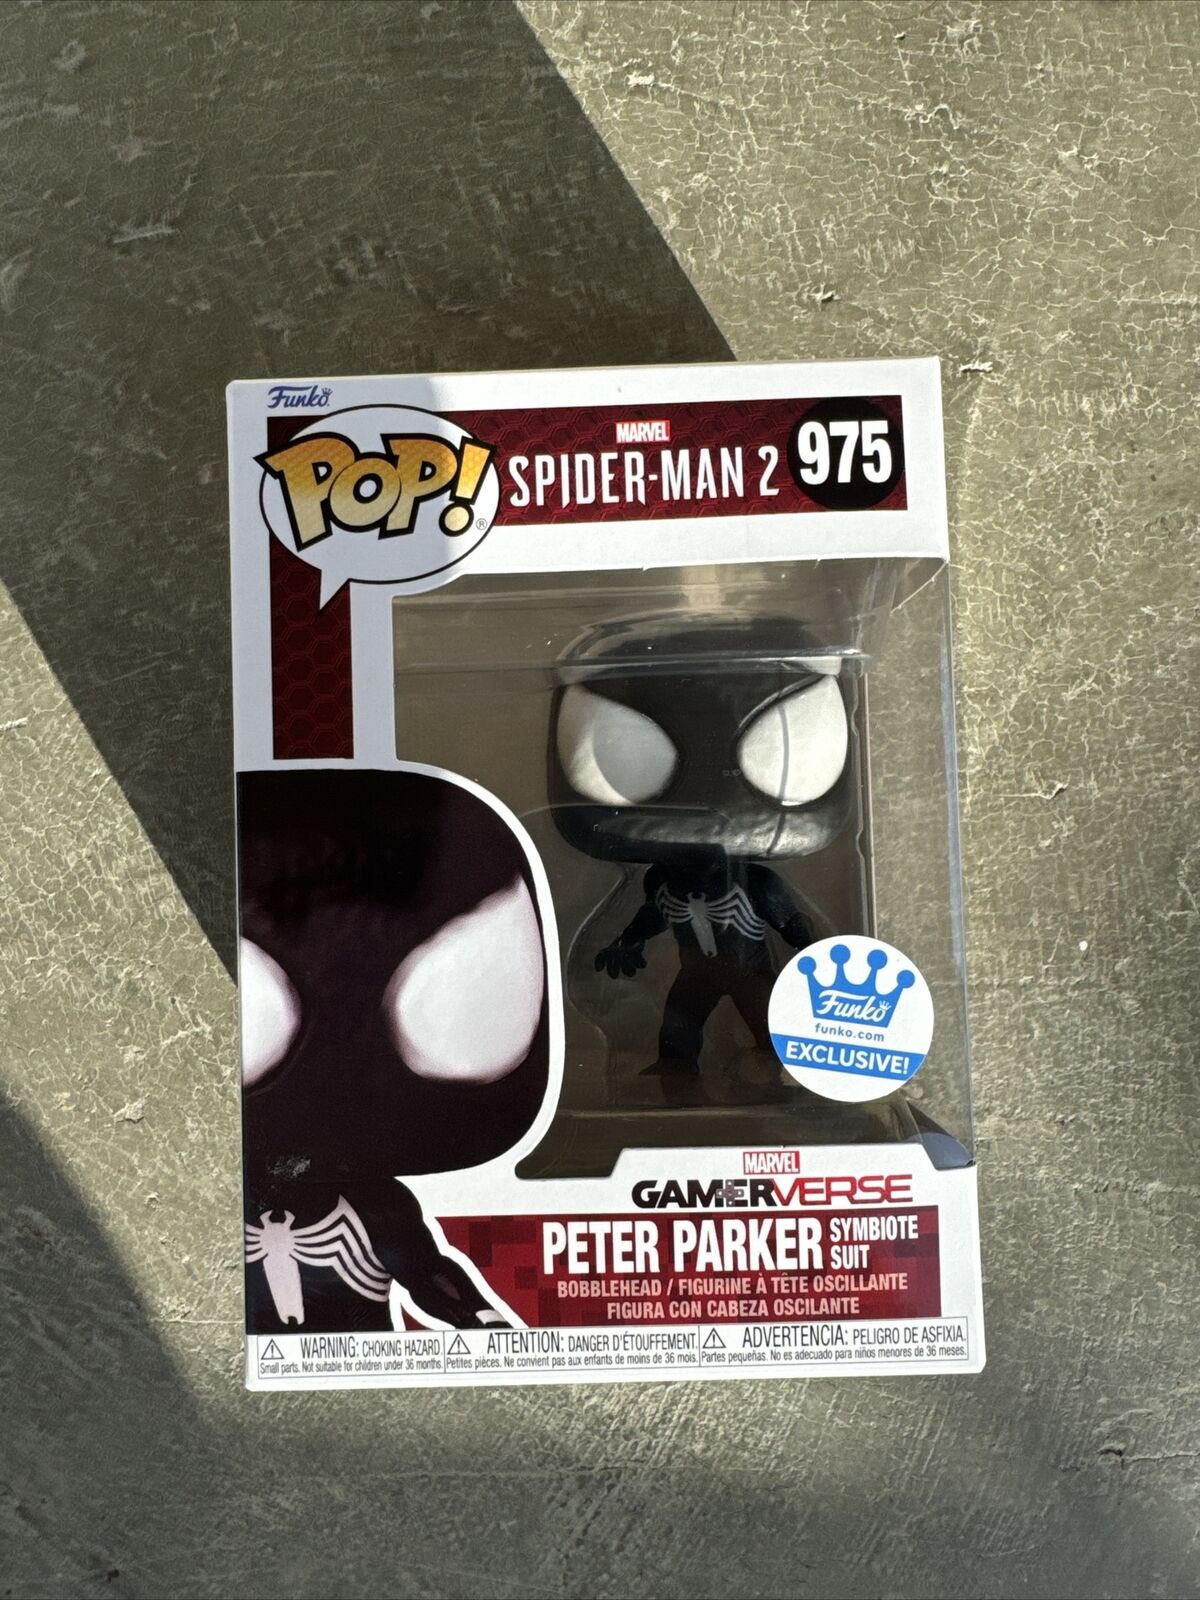 Funko Pop Vinyl: Marvel - Peter Parker Symbiote Suit - Funko (Exclusive) #975